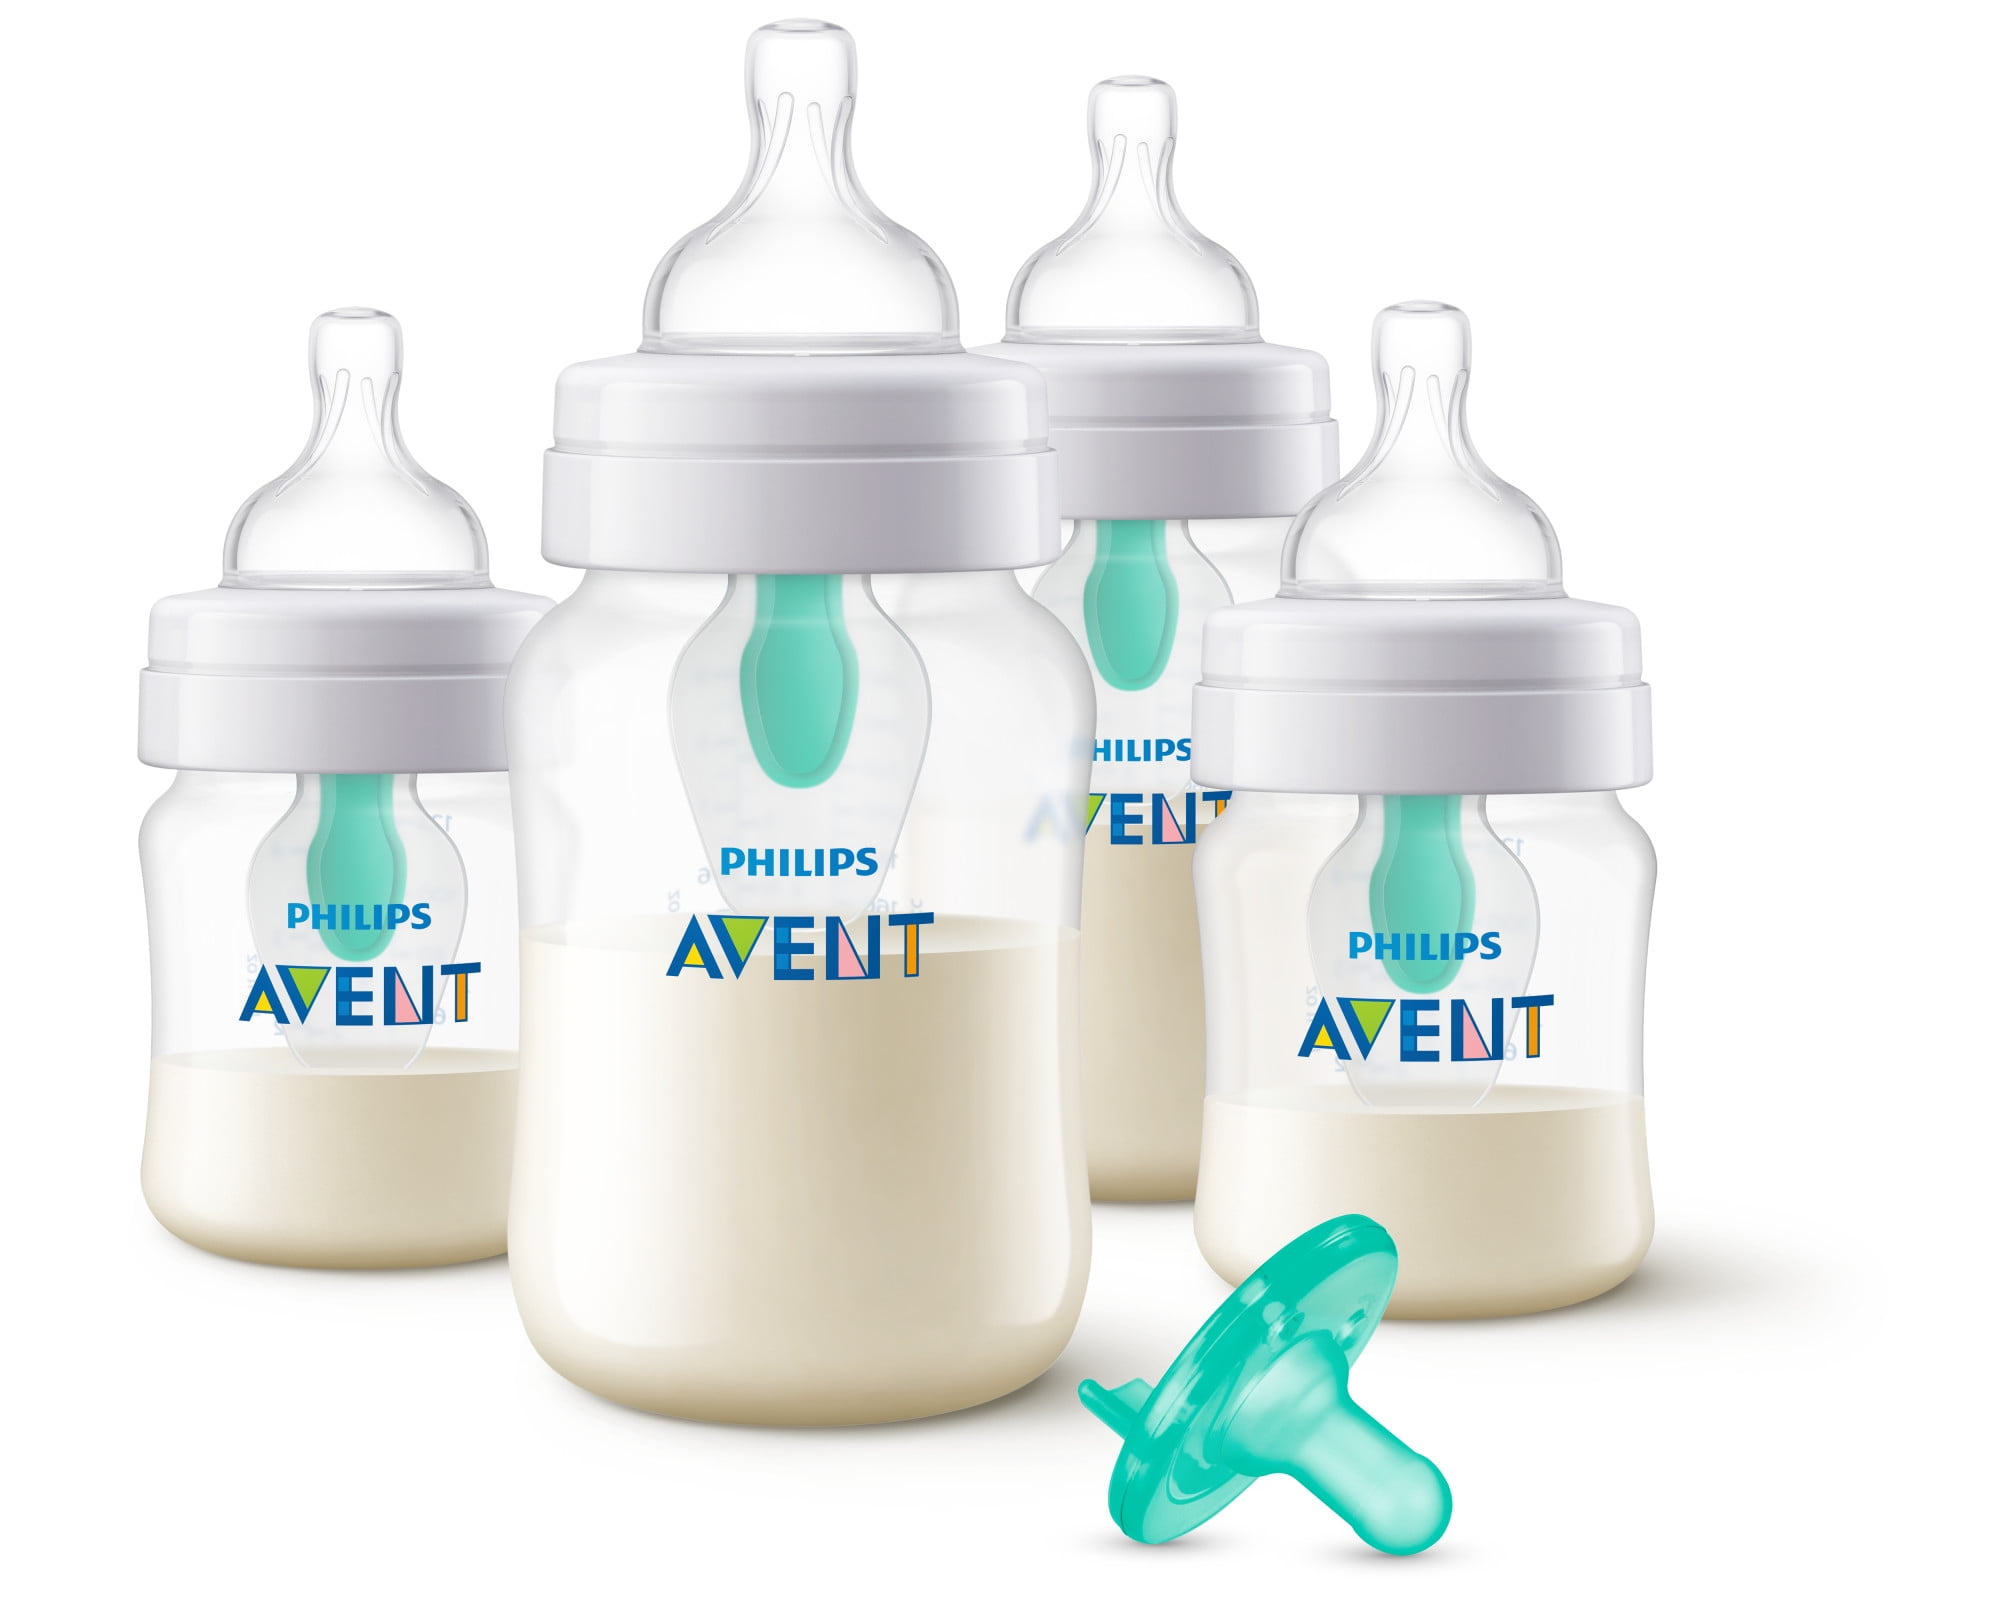 Biberon anti colique Maman-bébé (360 ml) - Blanc - Kiabi - 15.90€